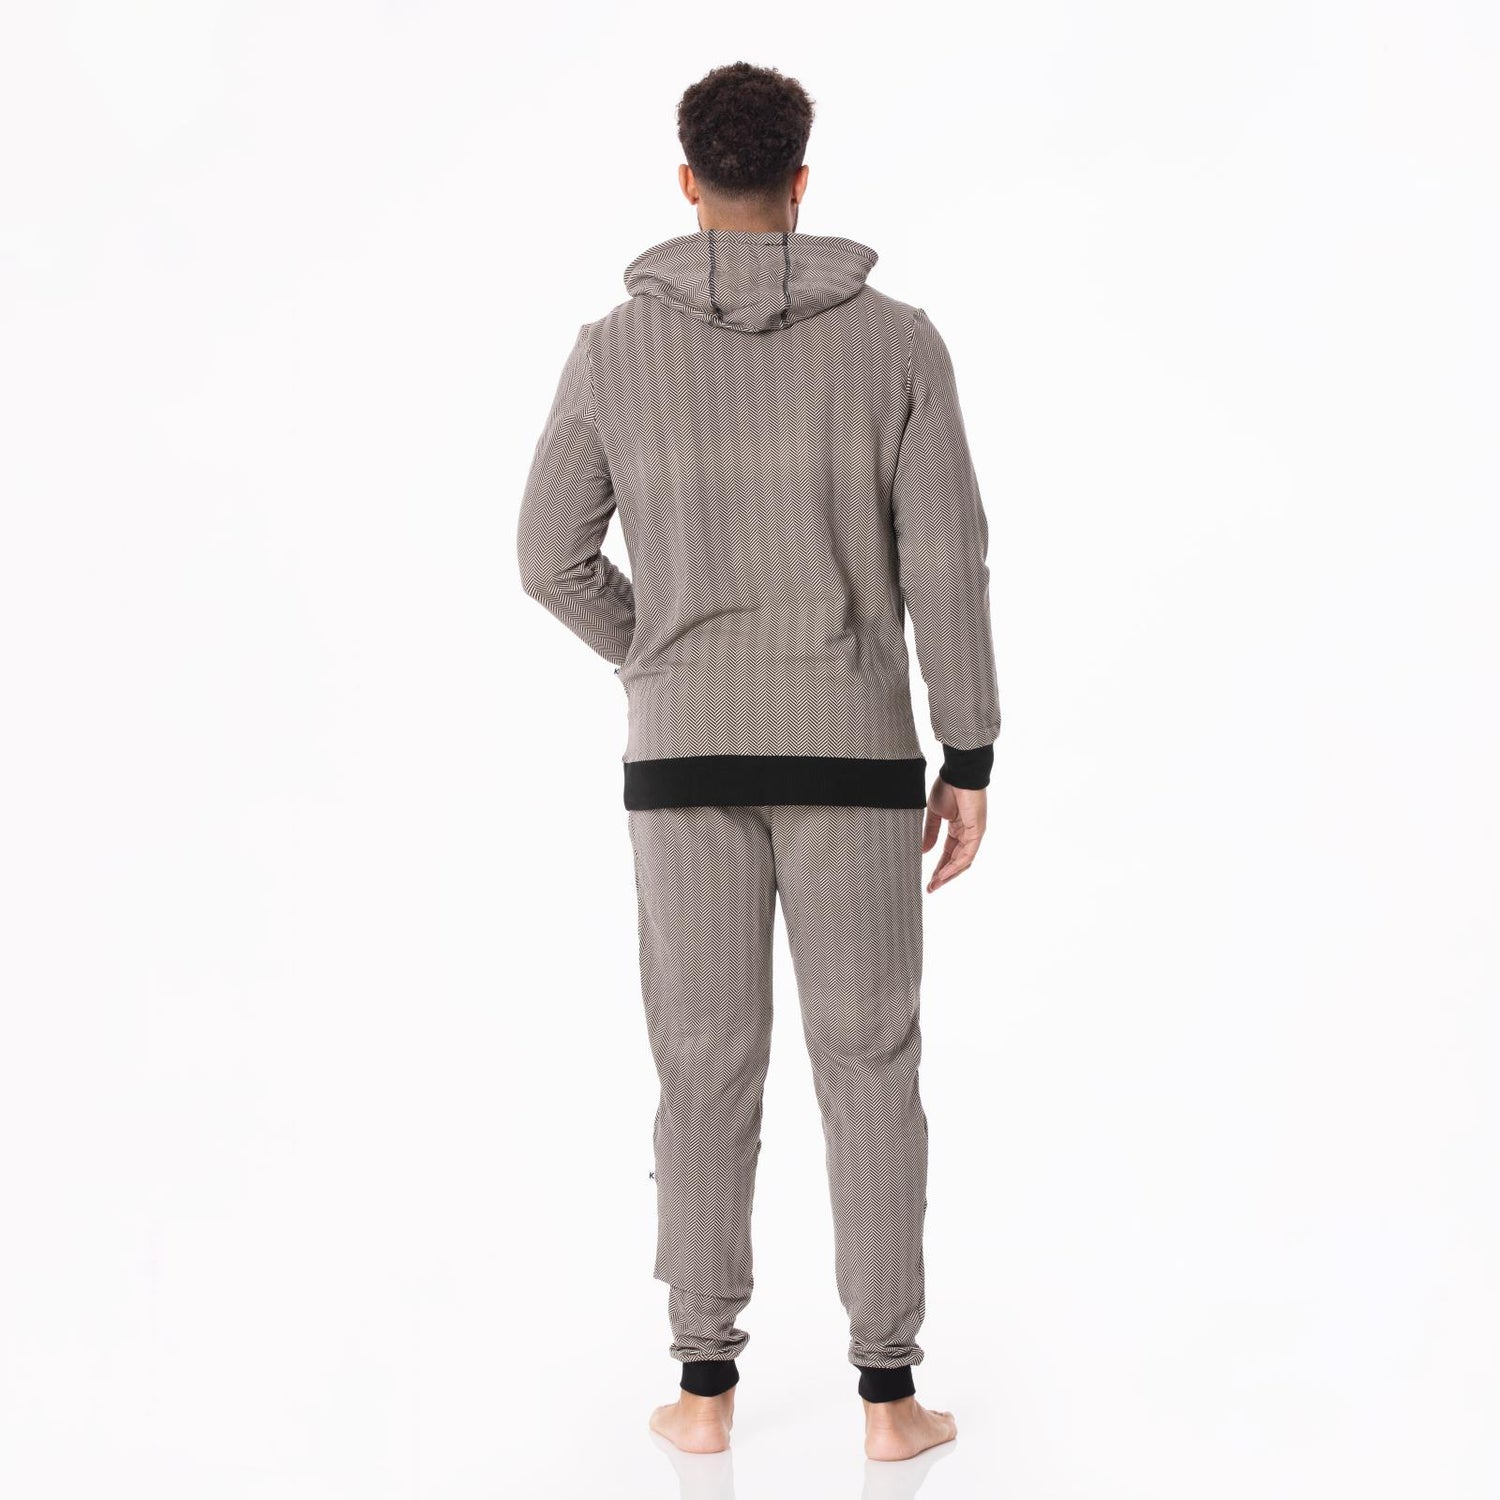 Men's Print Fleece Kangaroo Pocket Pullover in Herringbone